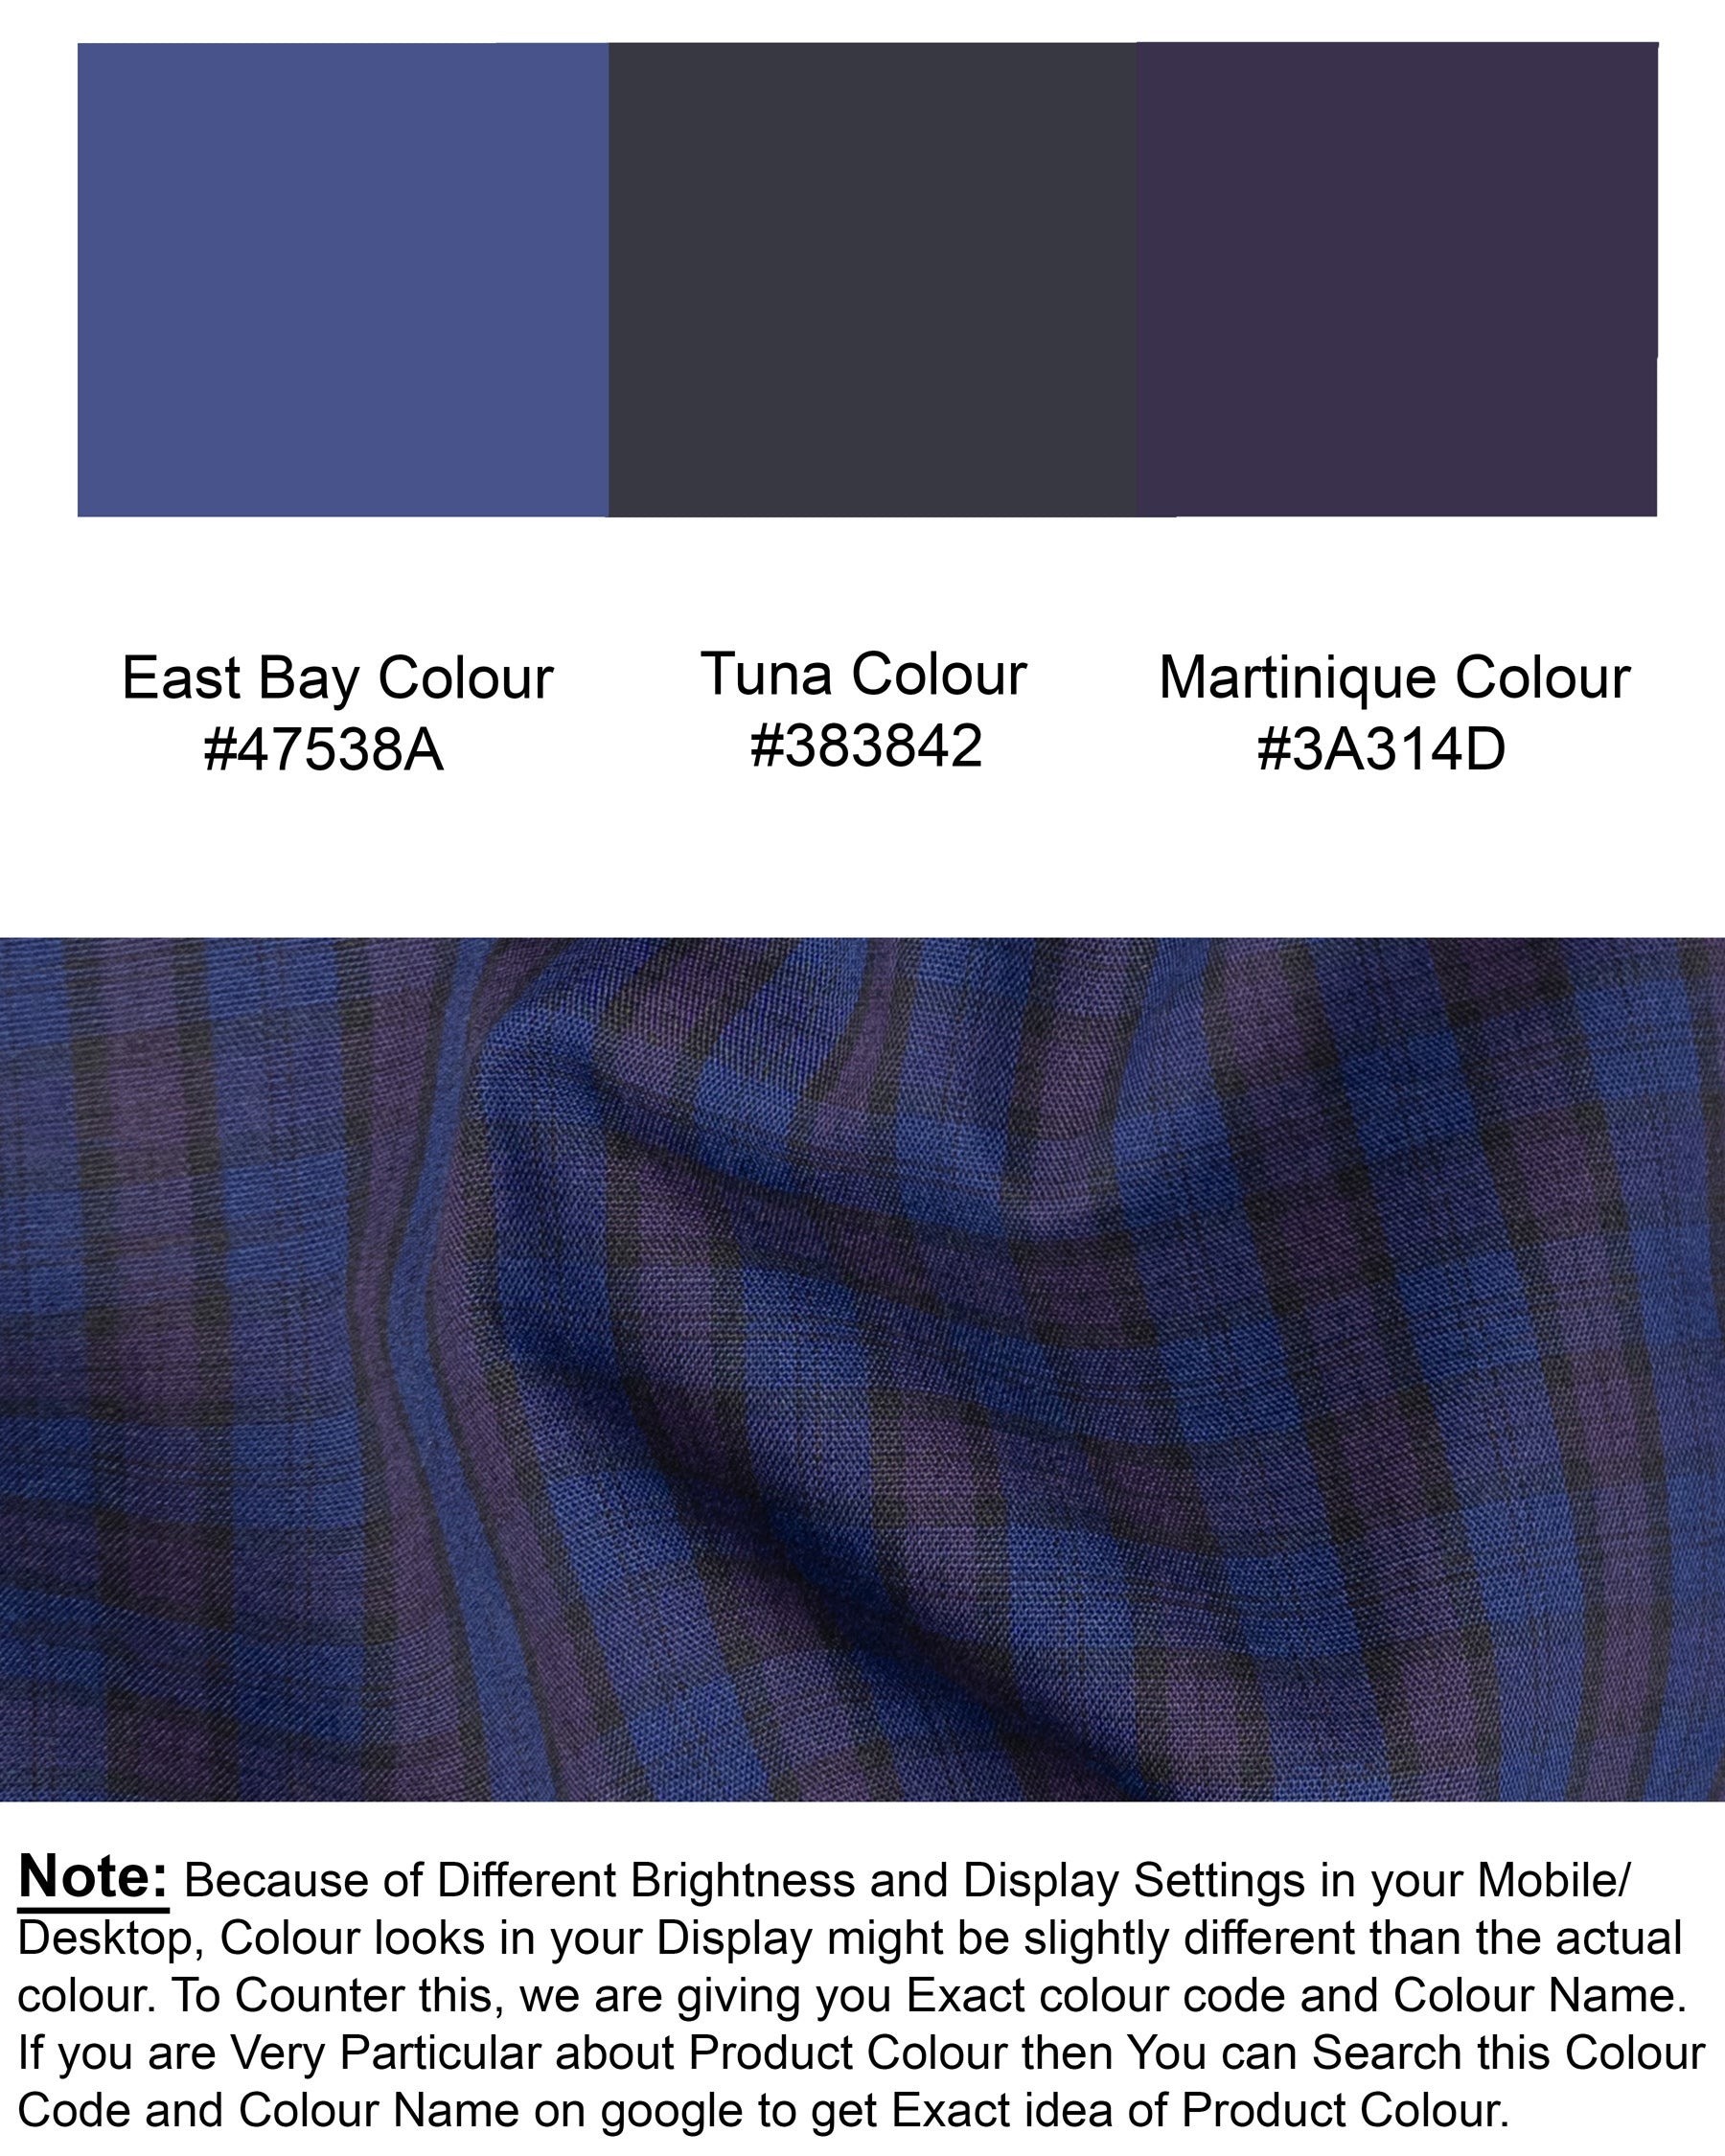 East Bay Blue Plaid Premium Cotton Kurta Style Shirt 4878-KS-38, 4878-KS-H-38, 4878-KS-39, 4878-KS-H-39, 4878-KS-40, 4878-KS-H-40, 4878-KS-42, 4878-KS-H-42, 4878-KS-44, 4878-KS-H-44, 4878-KS-46, 4878-KS-H-46, 4878-KS-48, 4878-KS-H-48, 4878-KS-50, 4878-KS-H-50, 4878-KS-52, 4878-KS-H-52